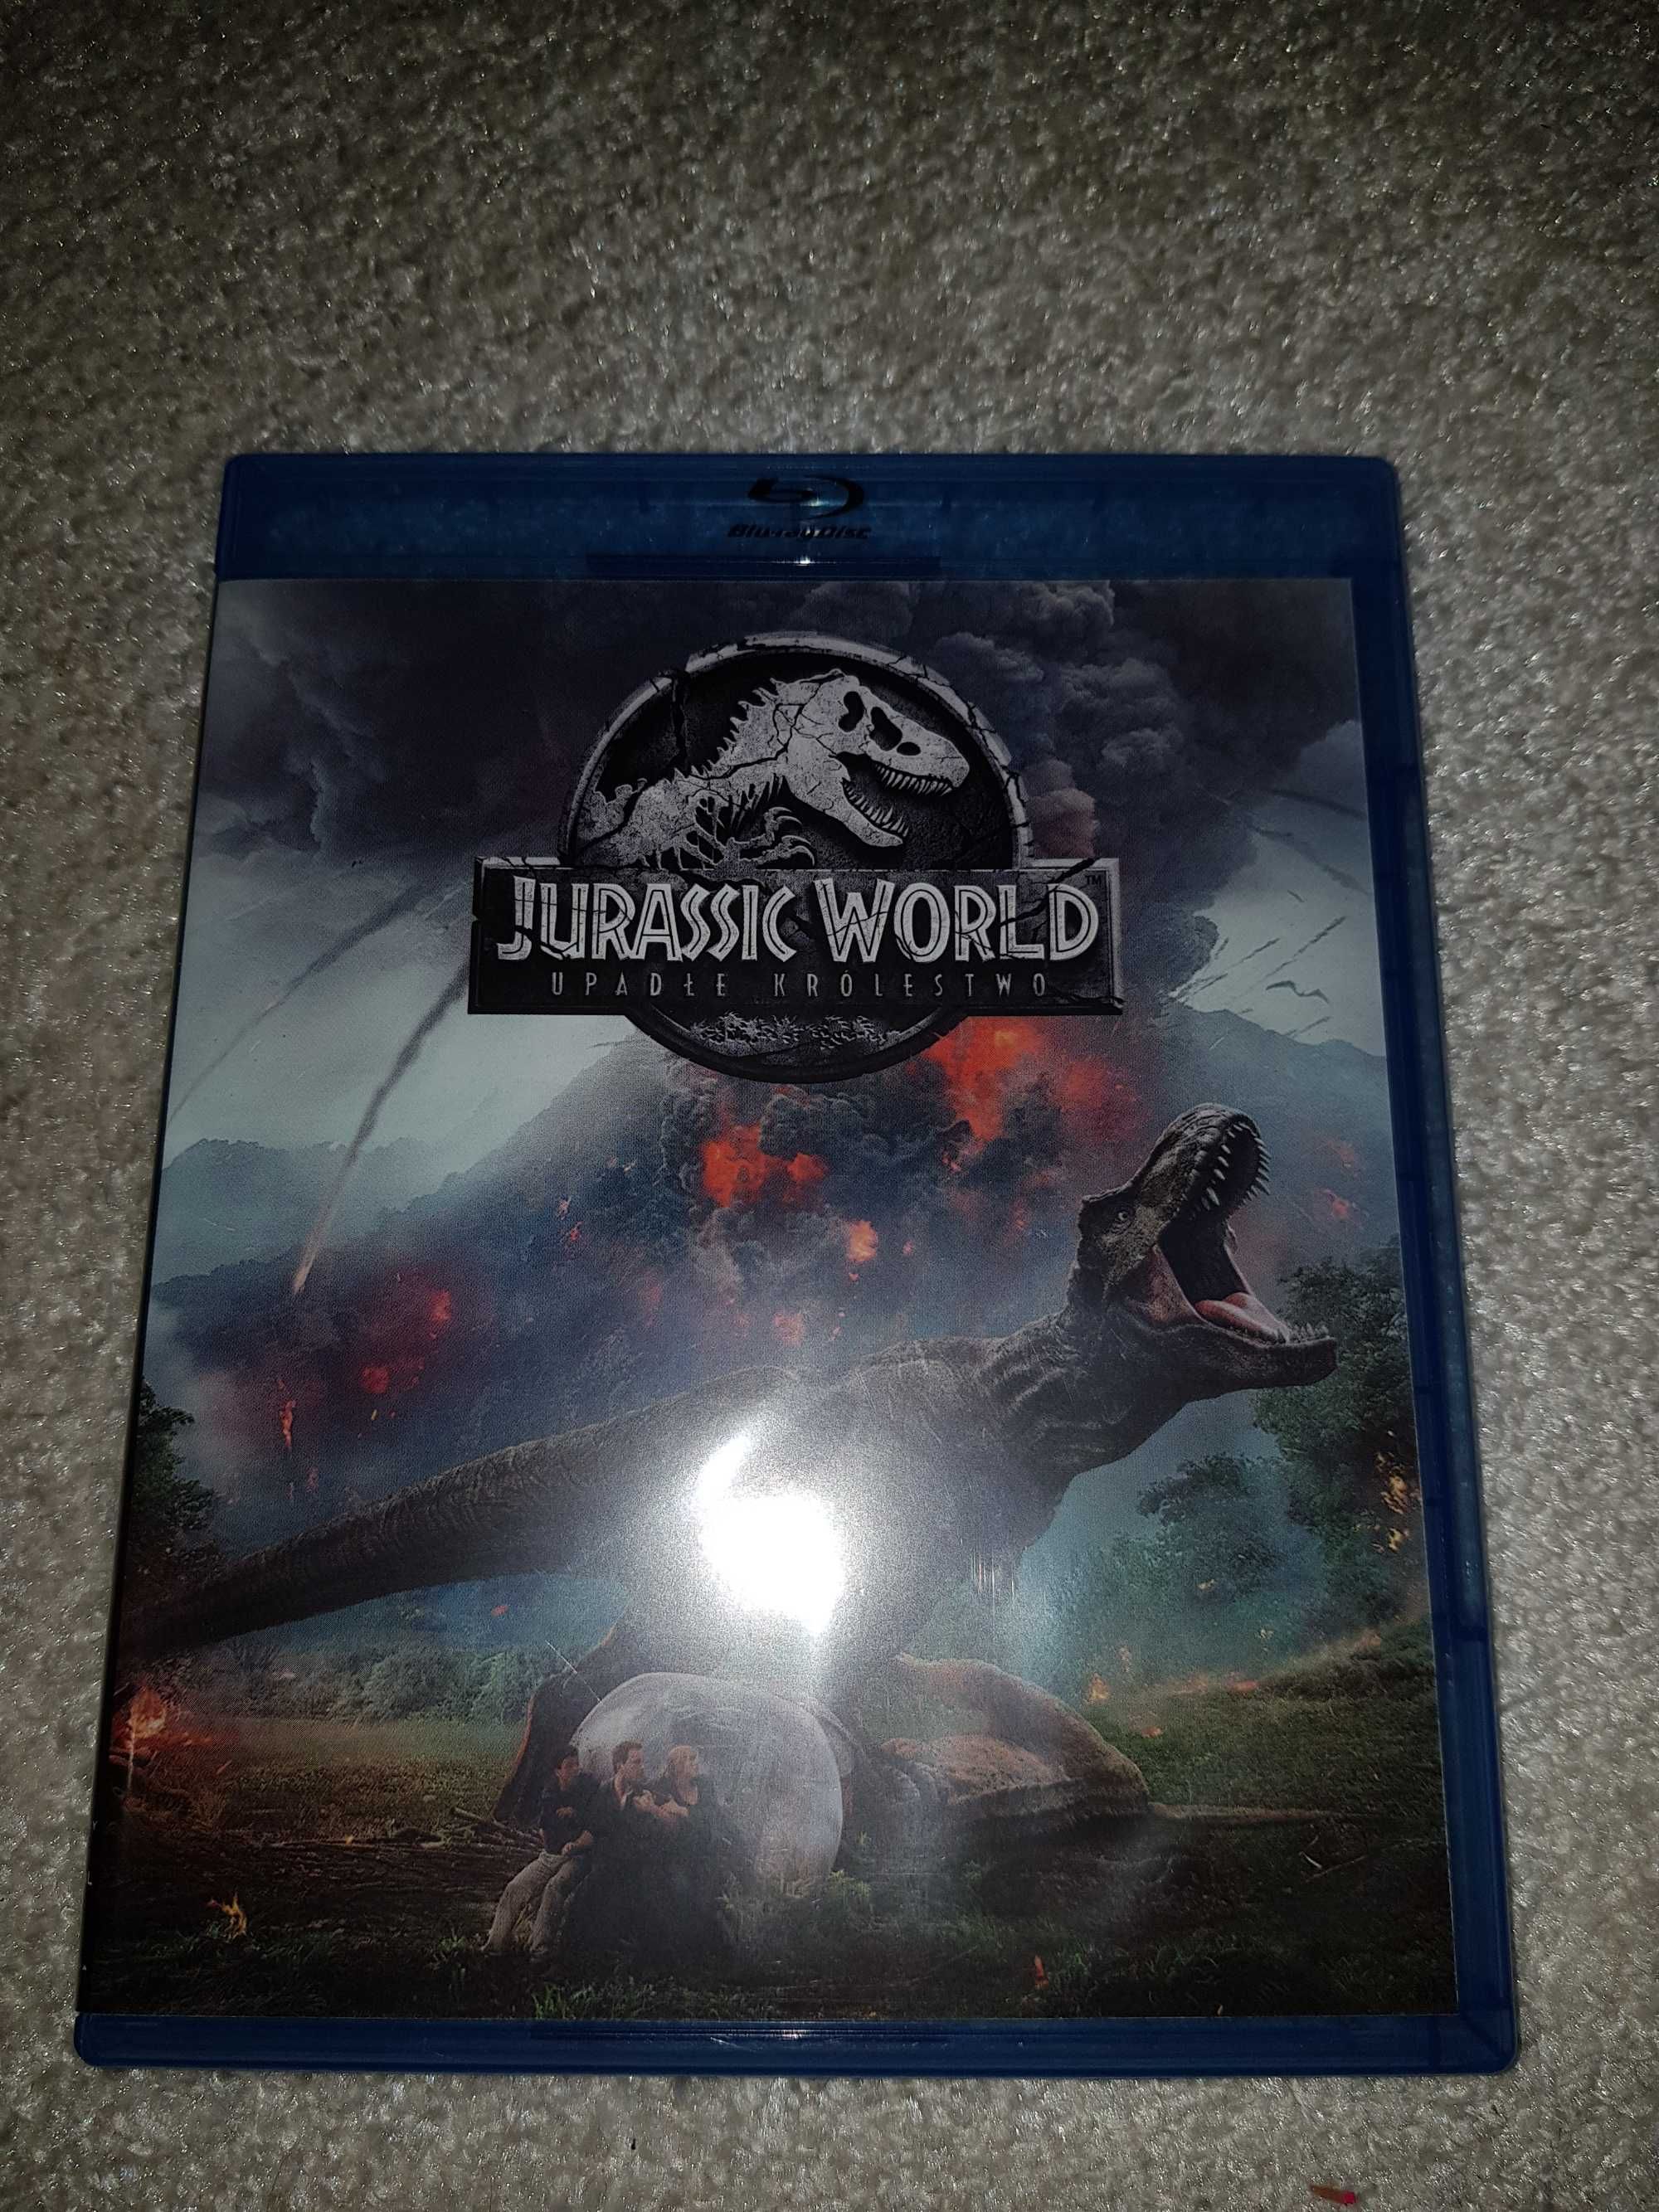 Jurassic World Upadłe królestwo BluRay Napisy/Lektor